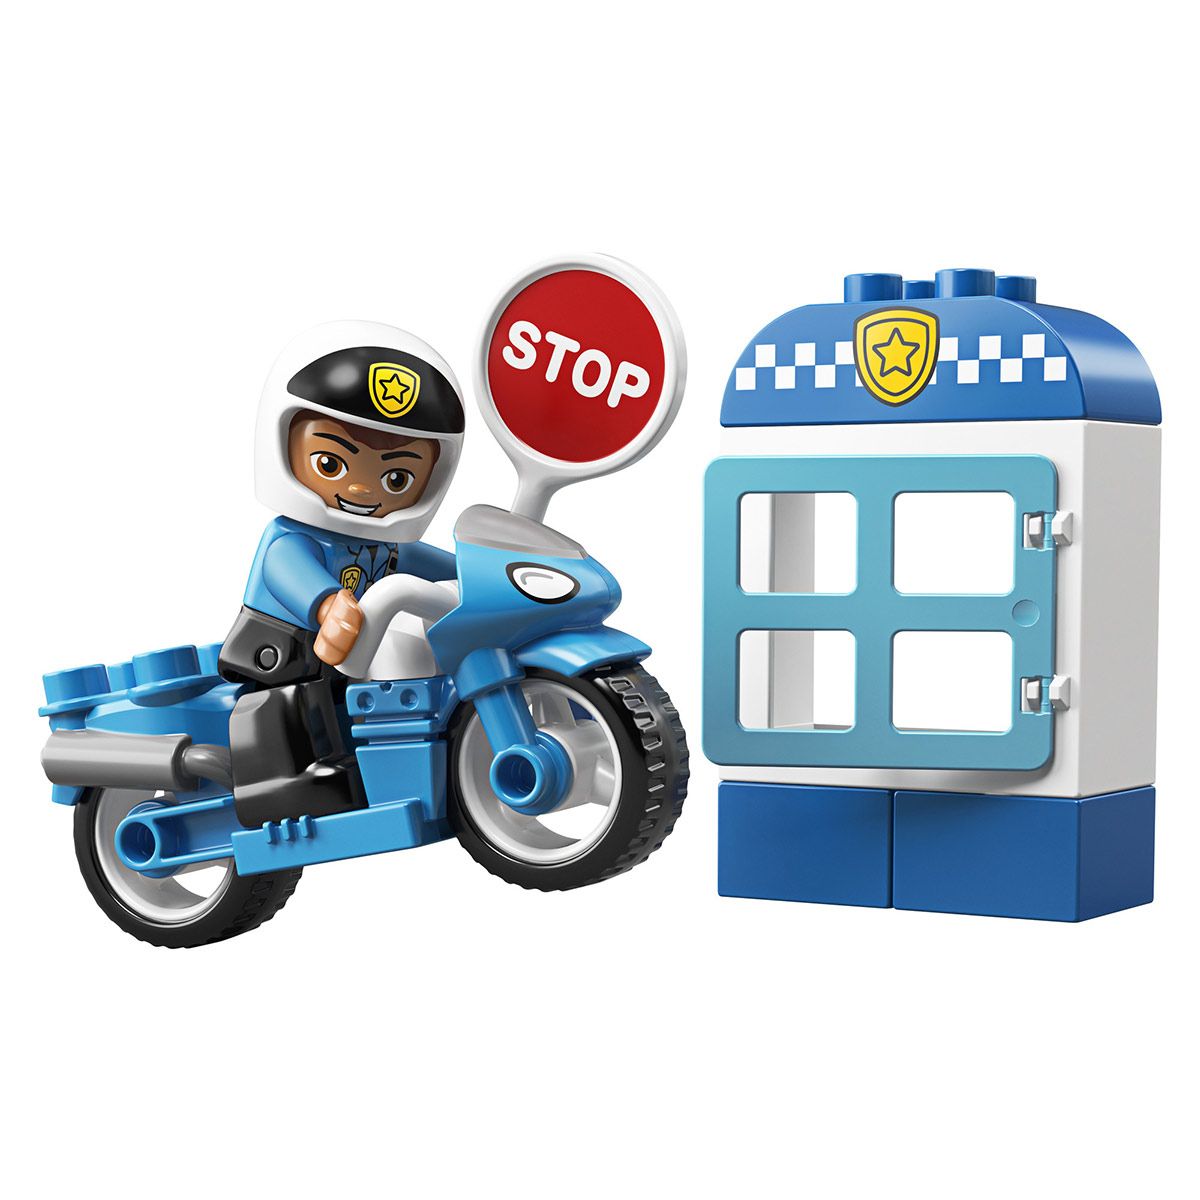 moto police lego